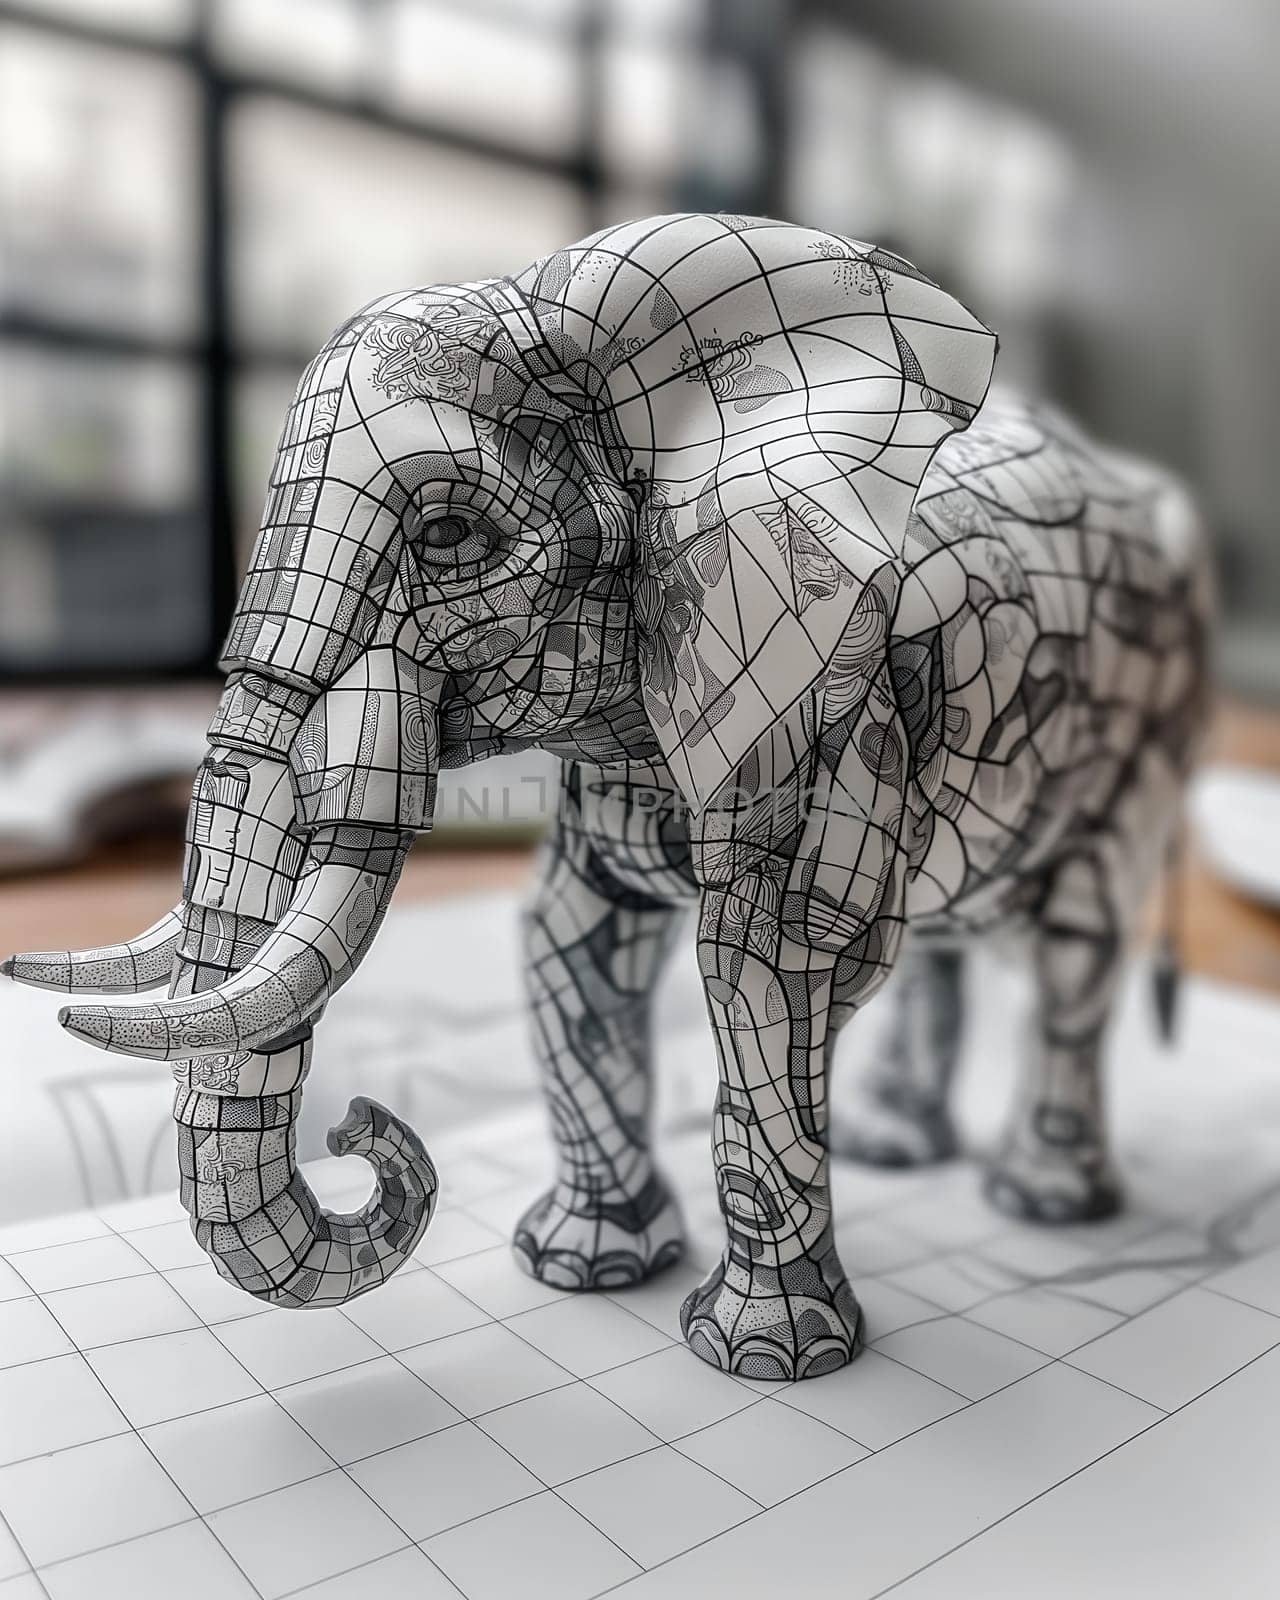 A digital elephant model in a workspace setting.